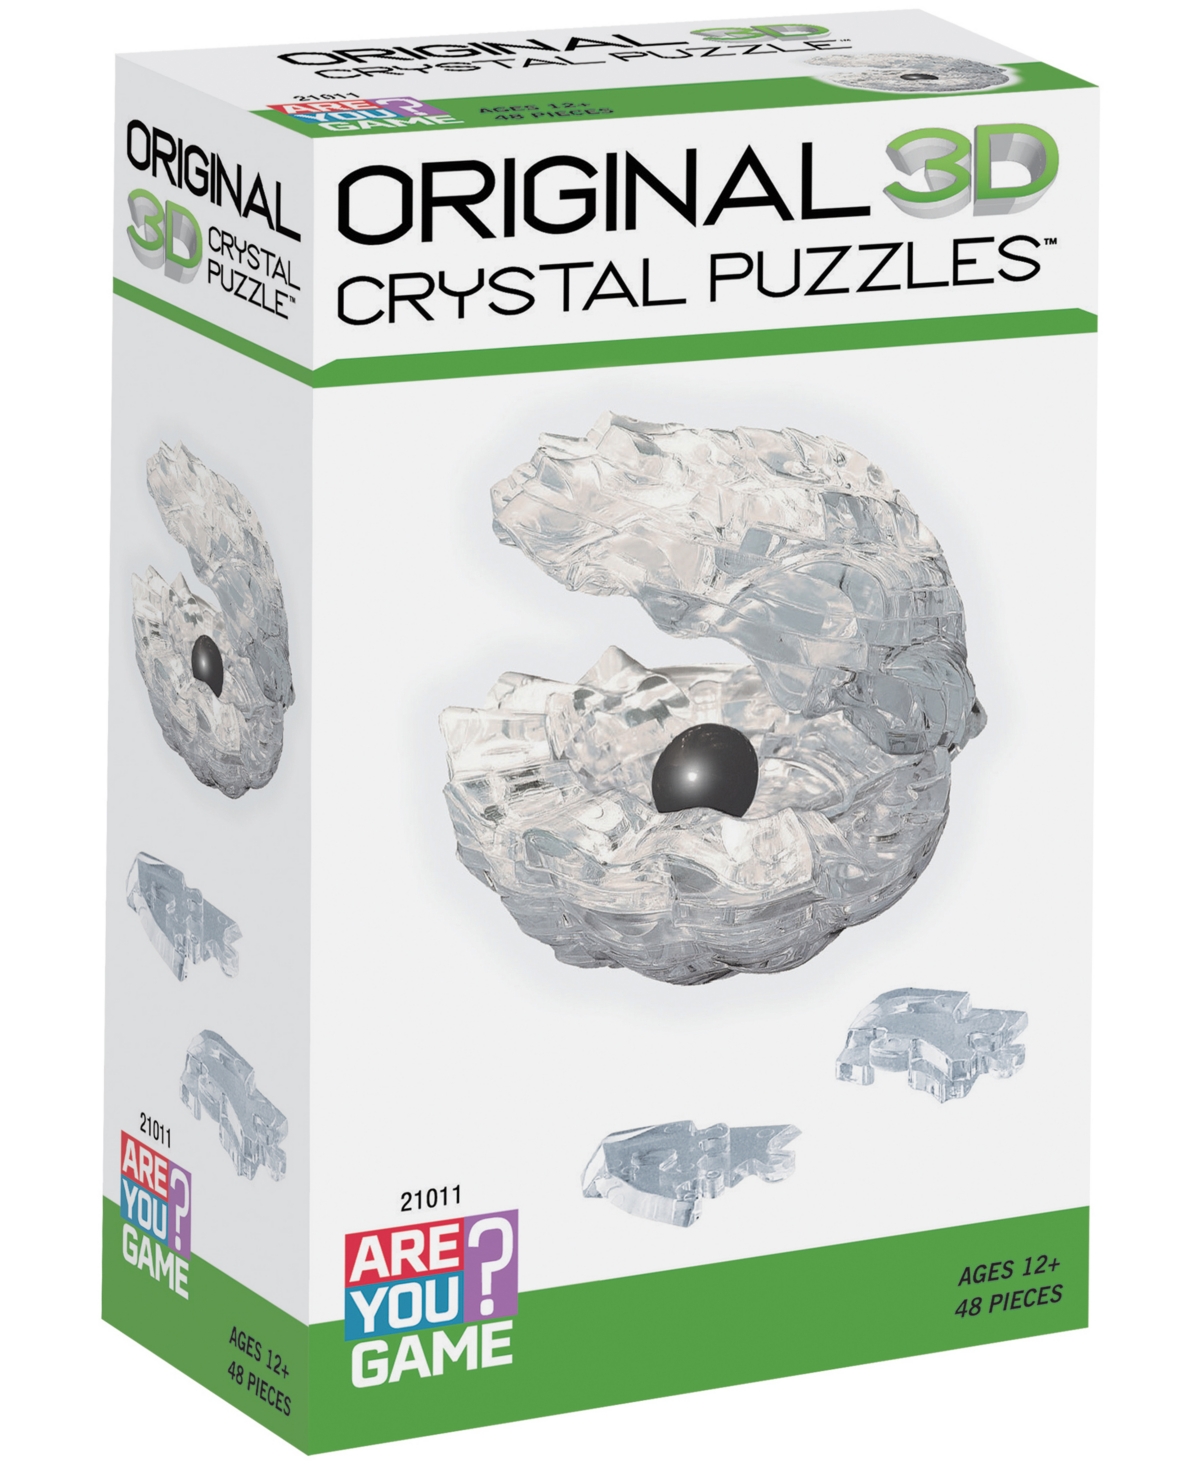 Shop Areyougame 3d Crystal Puzzle In No Color